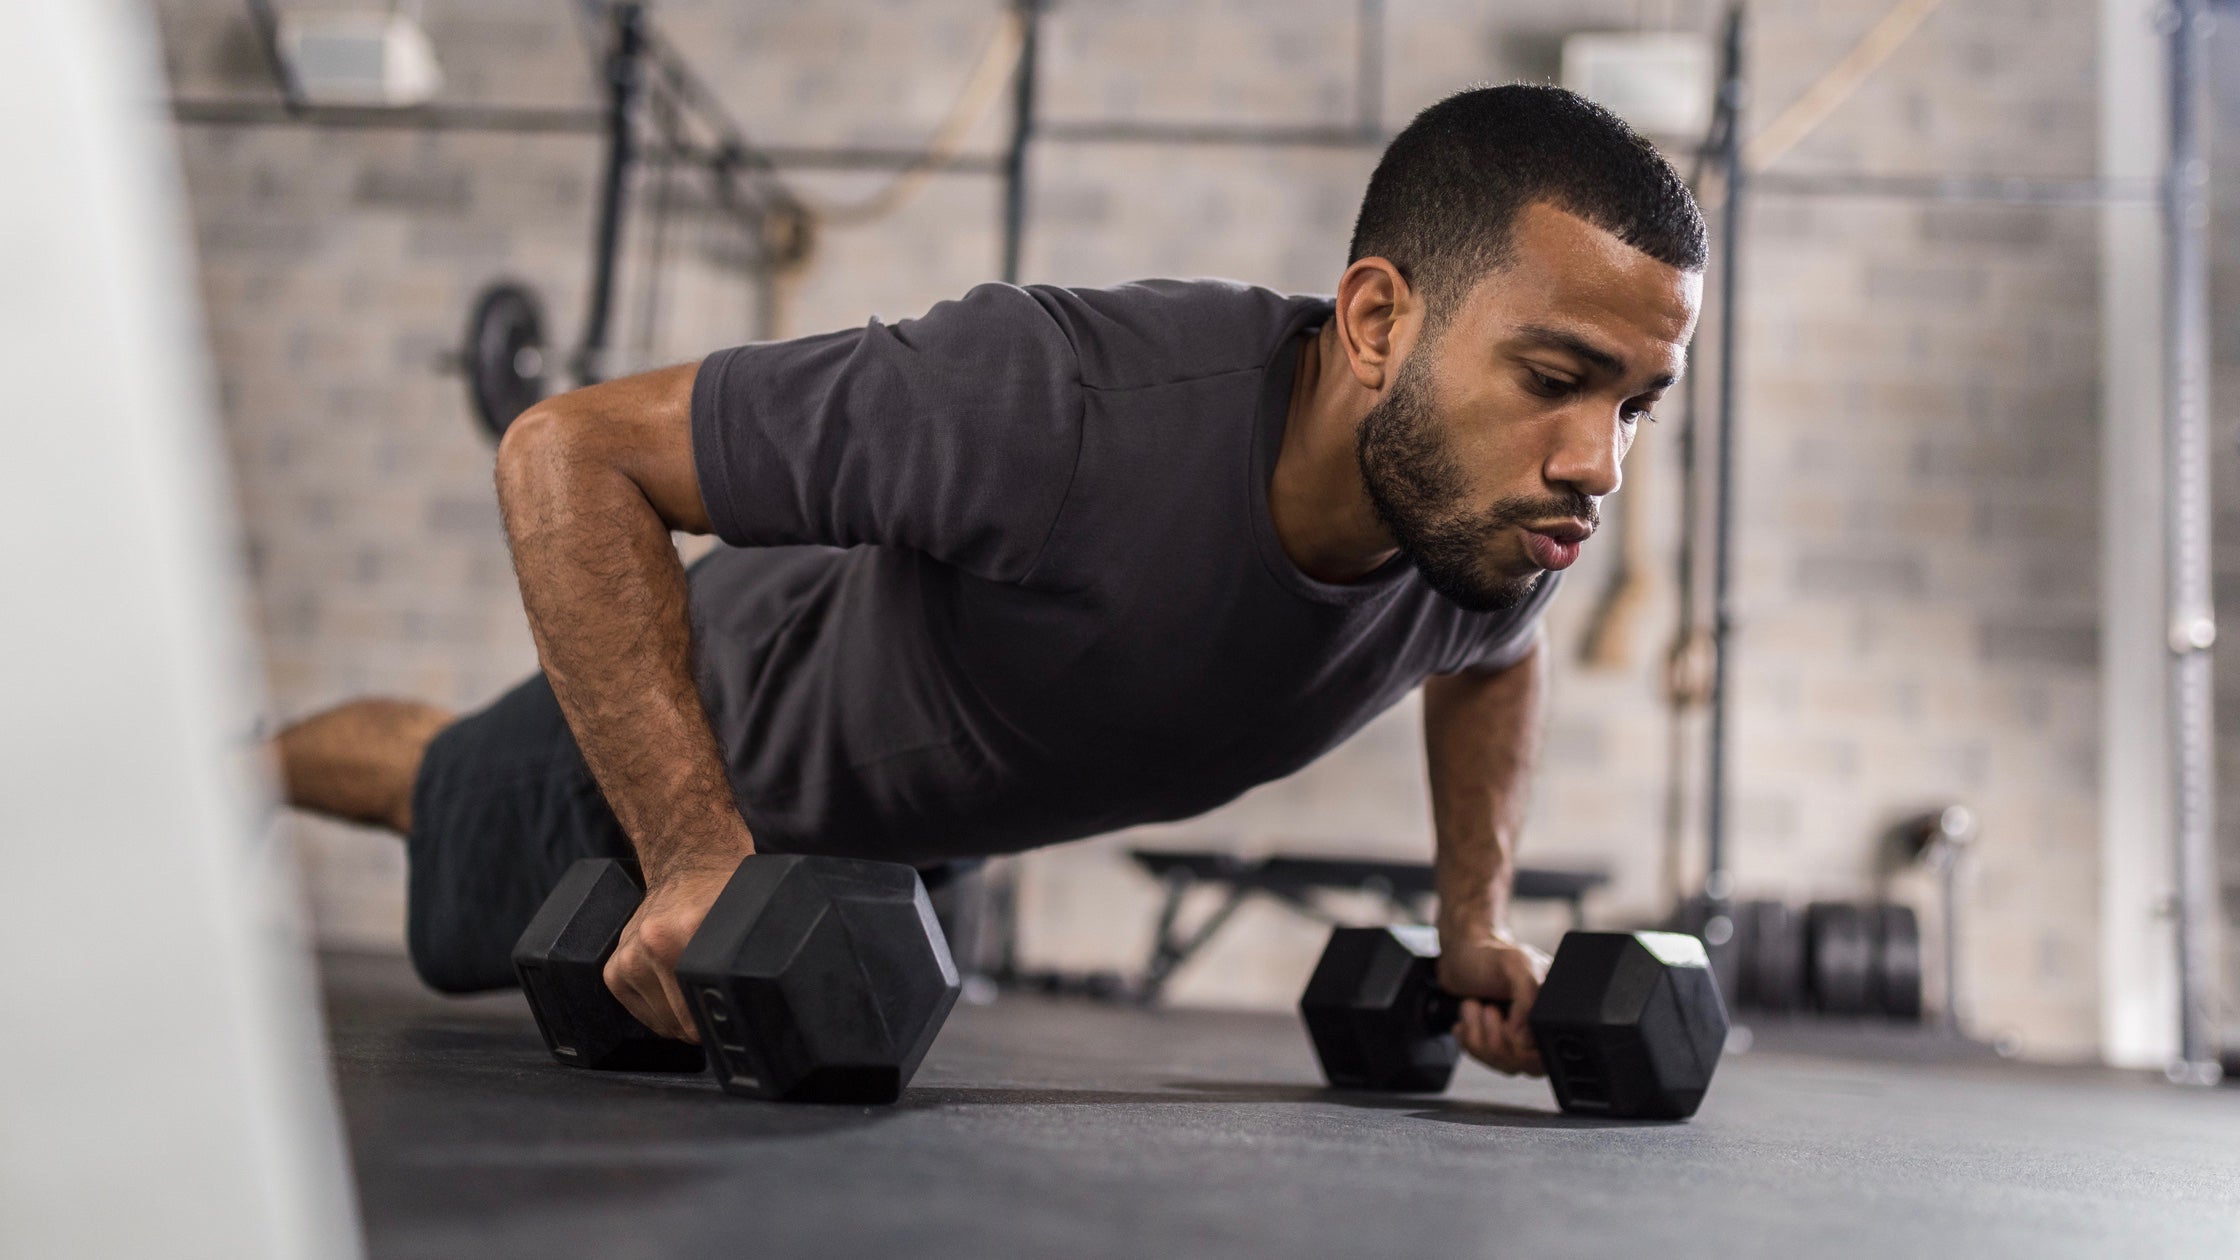 strength training for endurance athletes requires a progressive load program